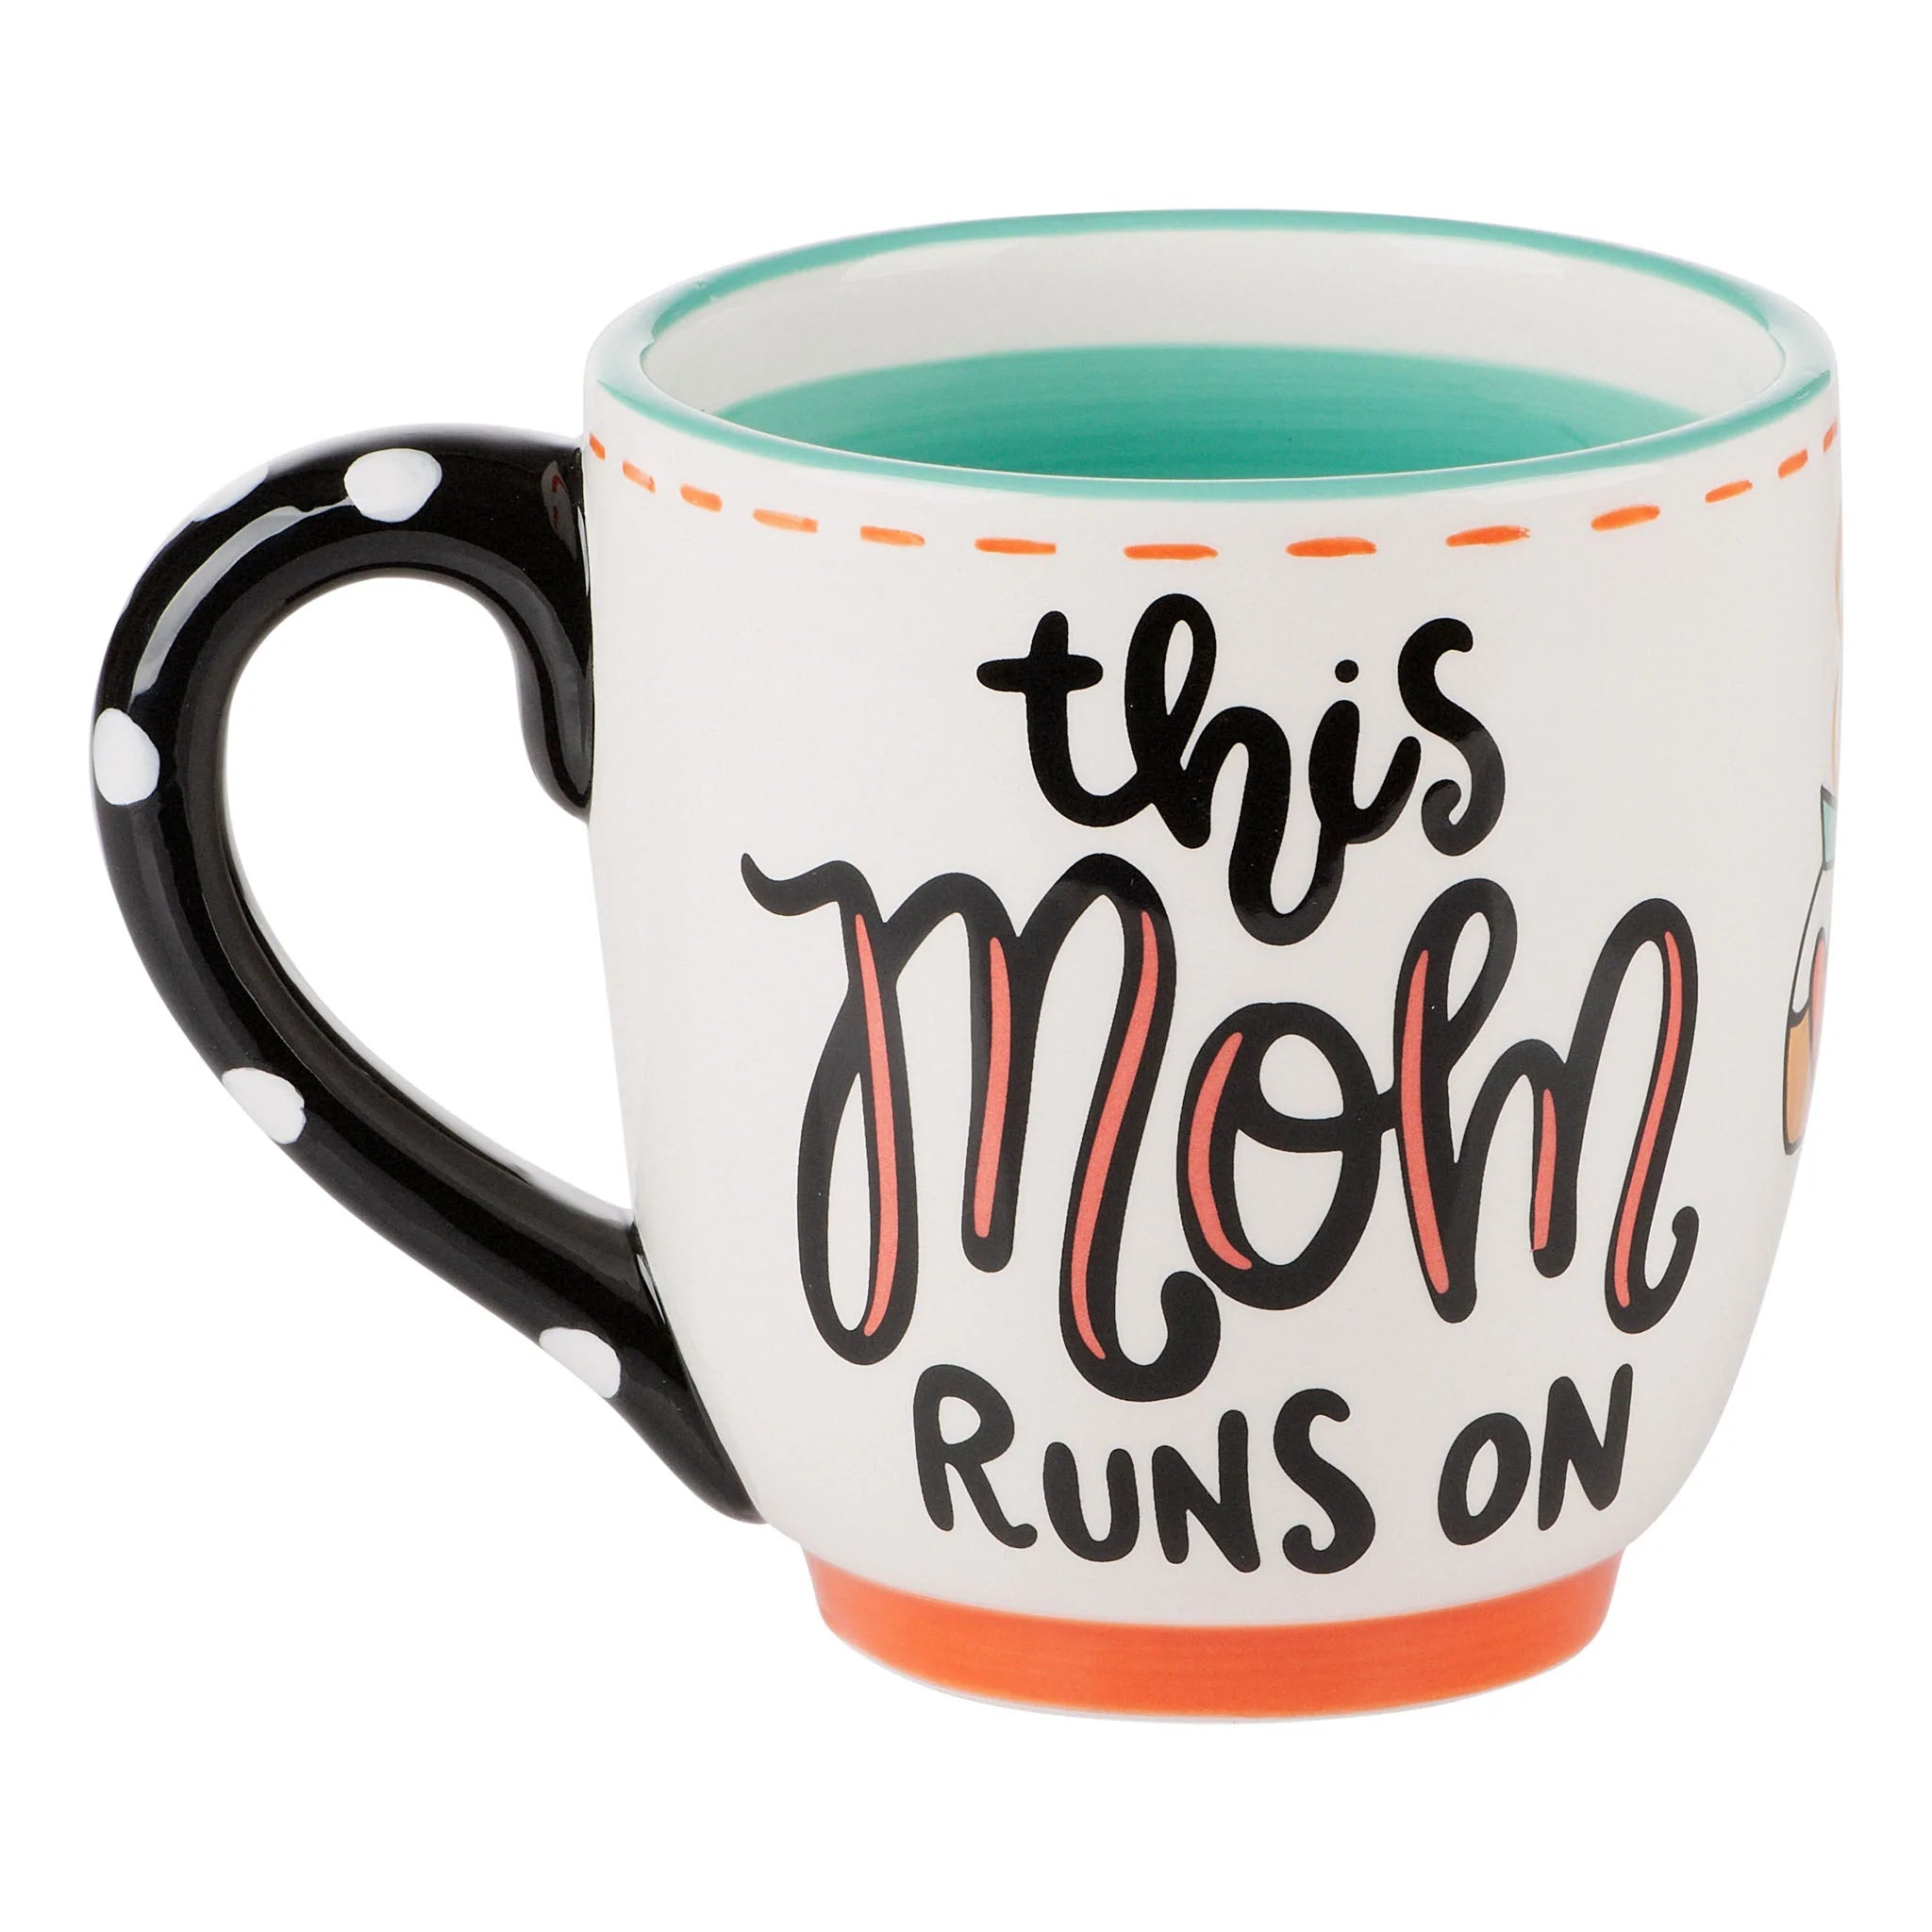 Mom Goal: Drink Coffee while it's still warm Mug – Sweet Mint